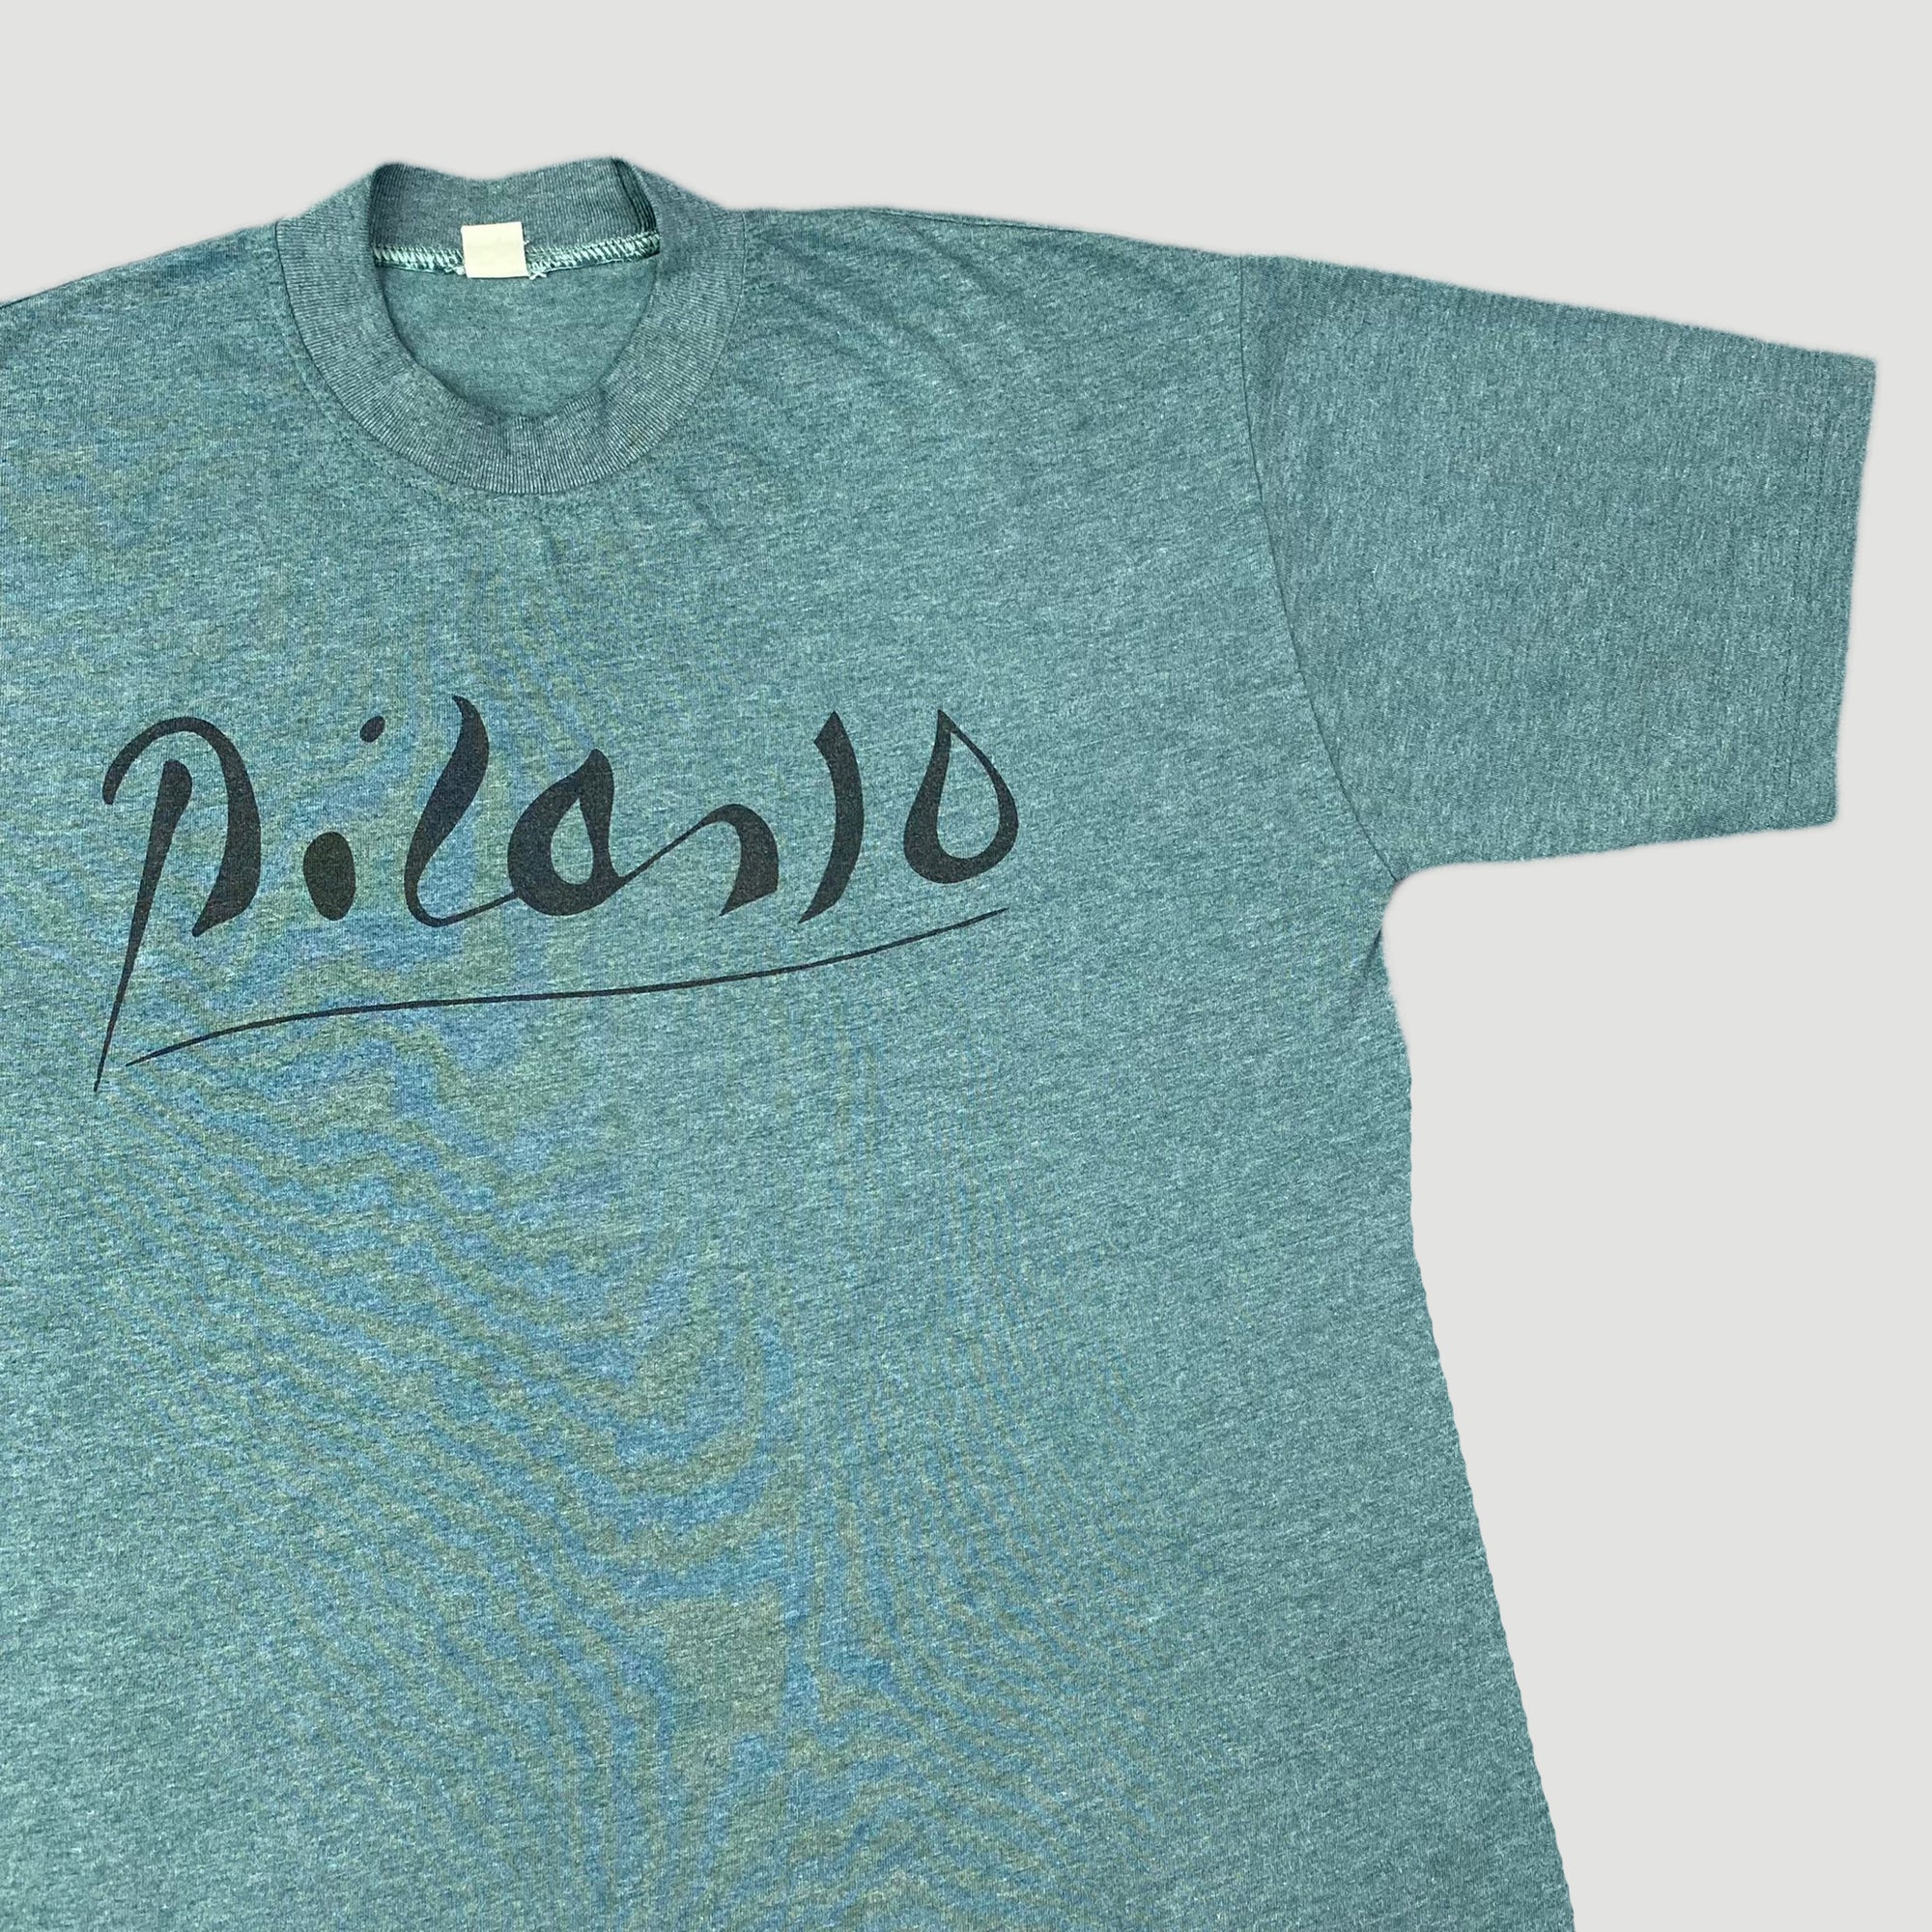 80's Picasso Signature T-Shirt